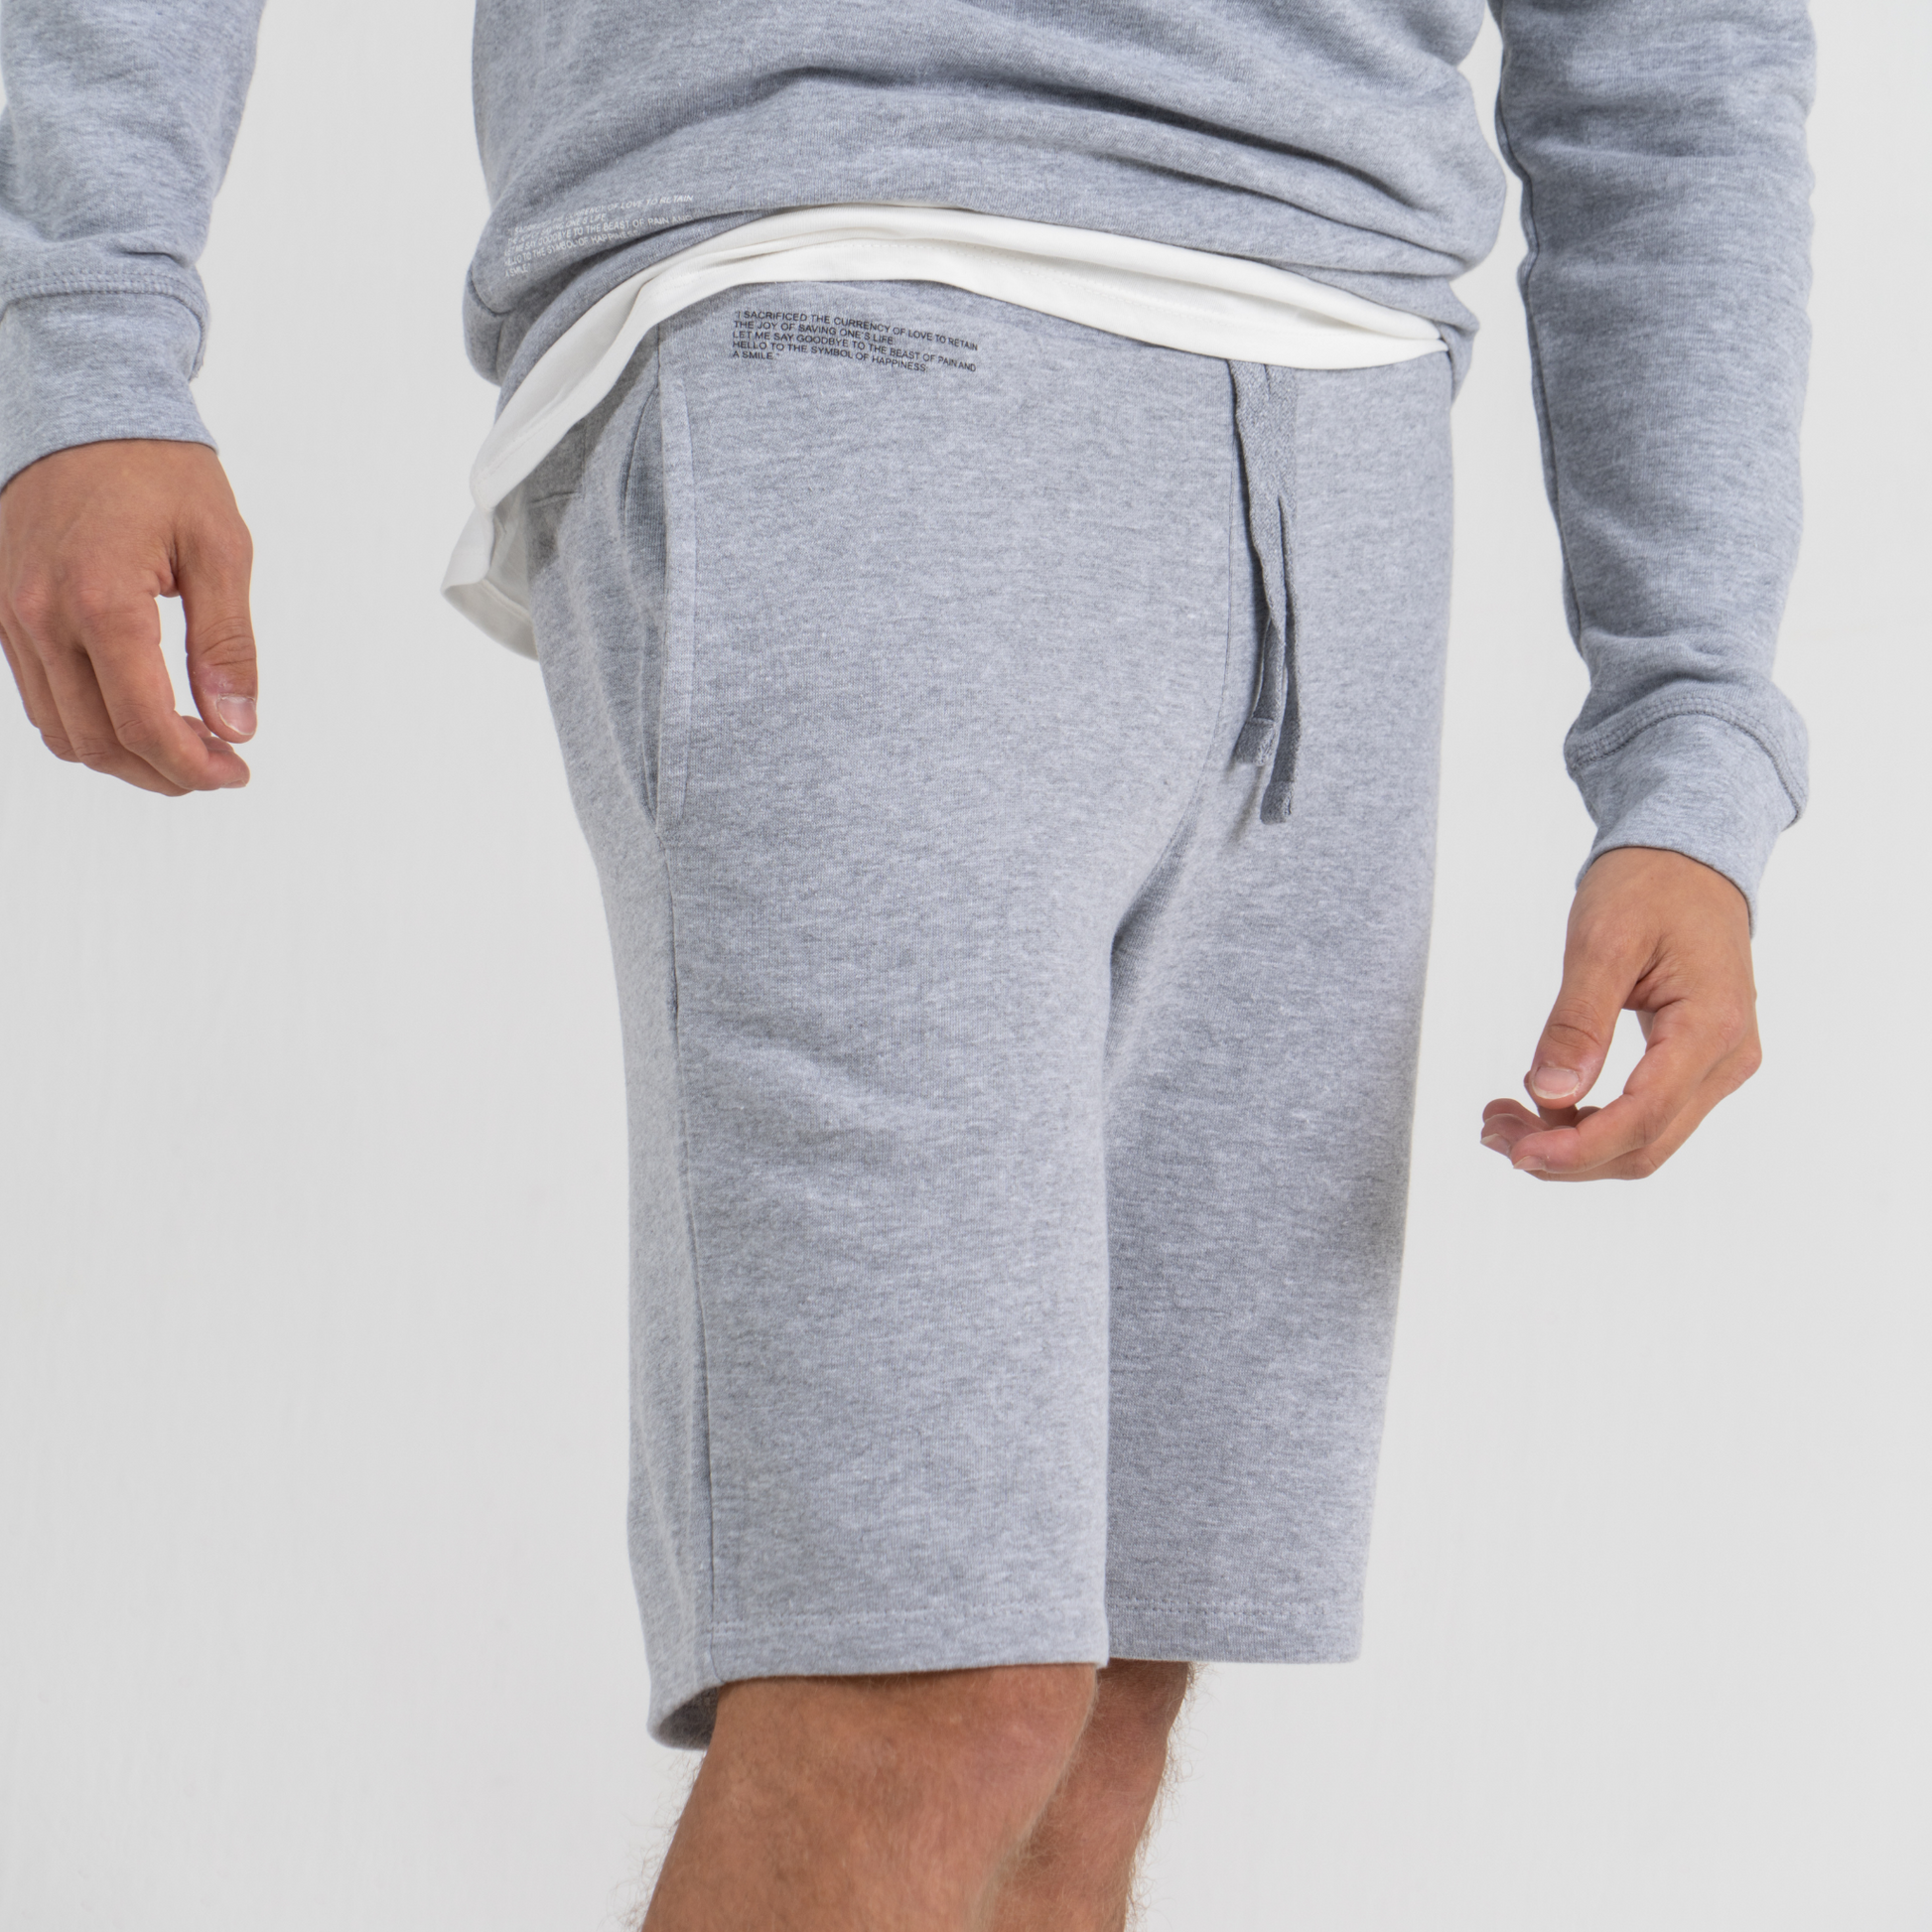 Man wearing grey sport shorts SU1 brand clothing